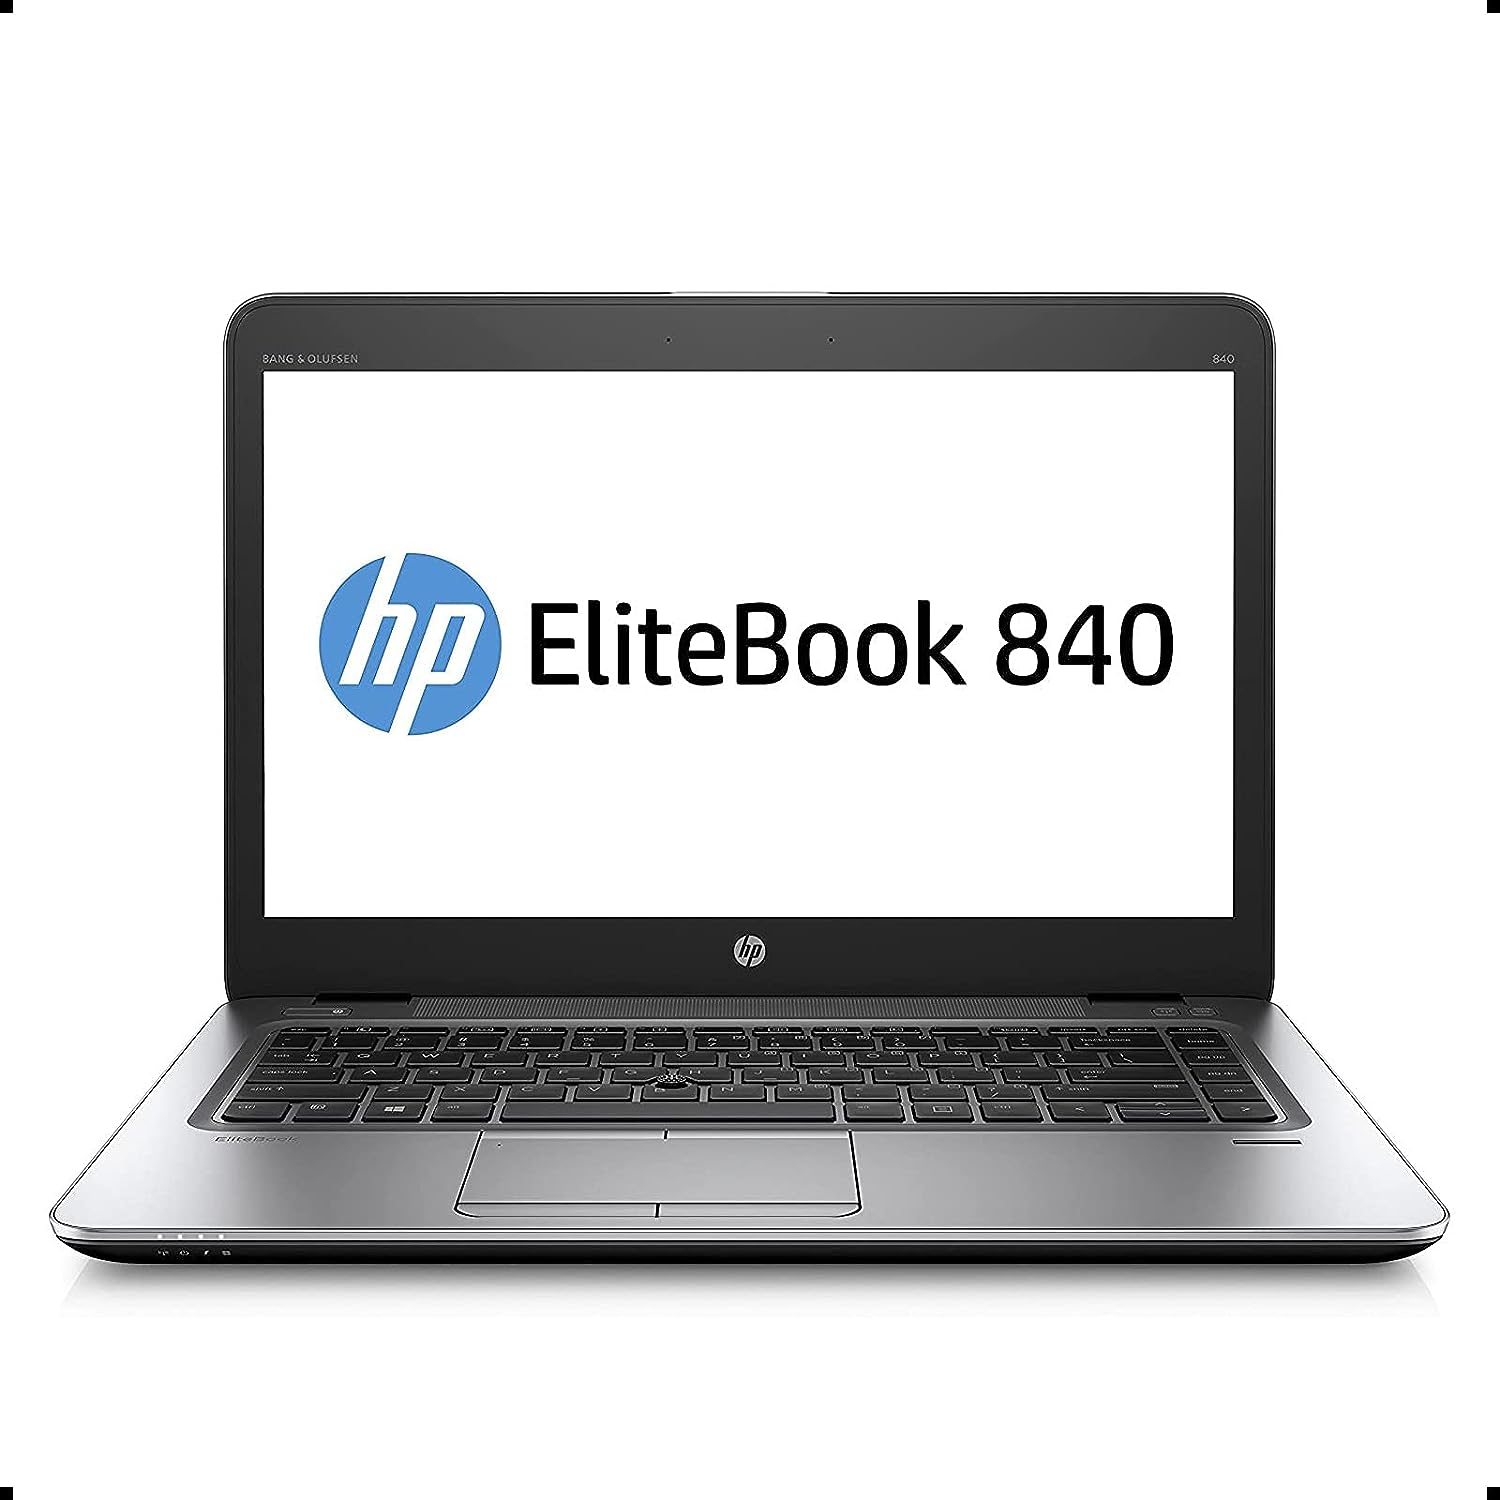 HP Elitebook 840 G3 Laptop Intel i7-6600U 2.6GHz, 16GB [...]